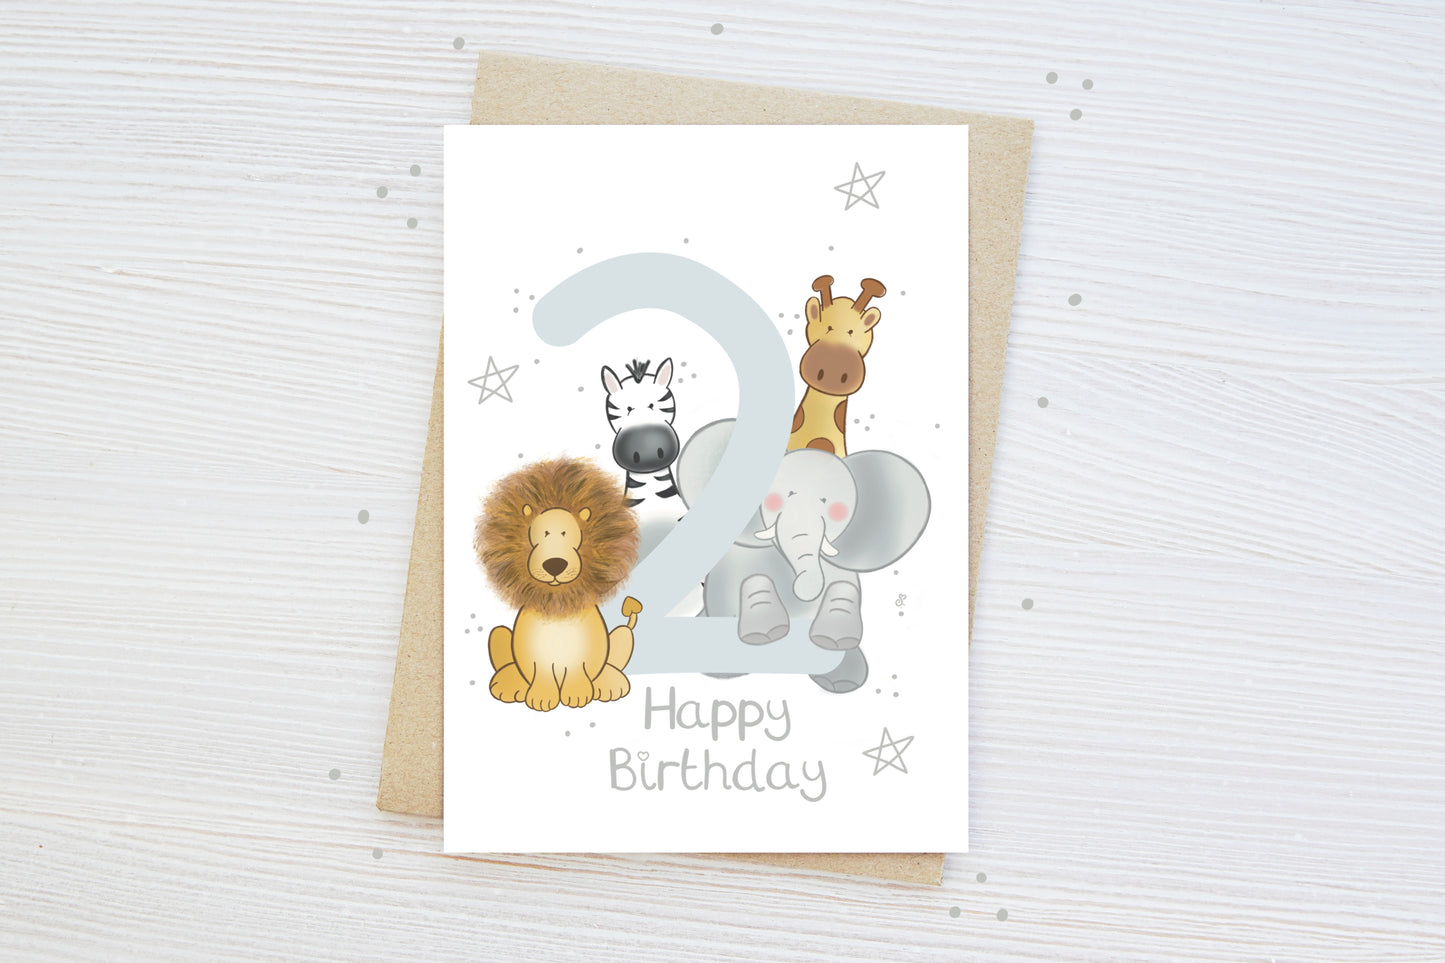 Luxury children's milestone birthday card with safari animal theme stars and happy birthday text and age 2